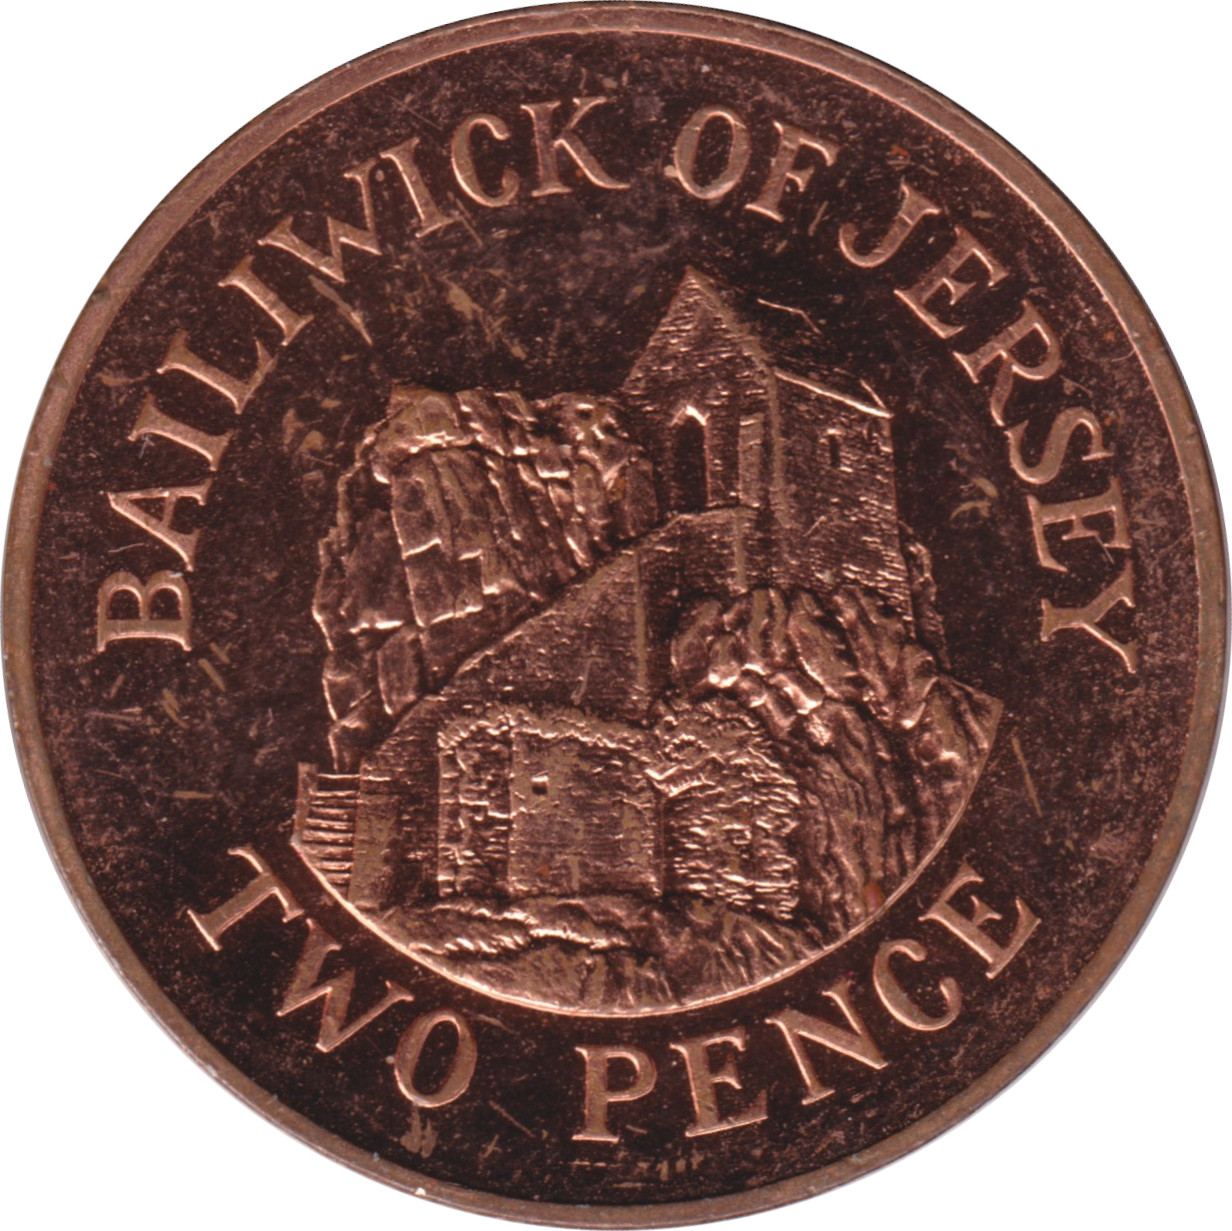 2 pence - Elizabeth II - Buste mature